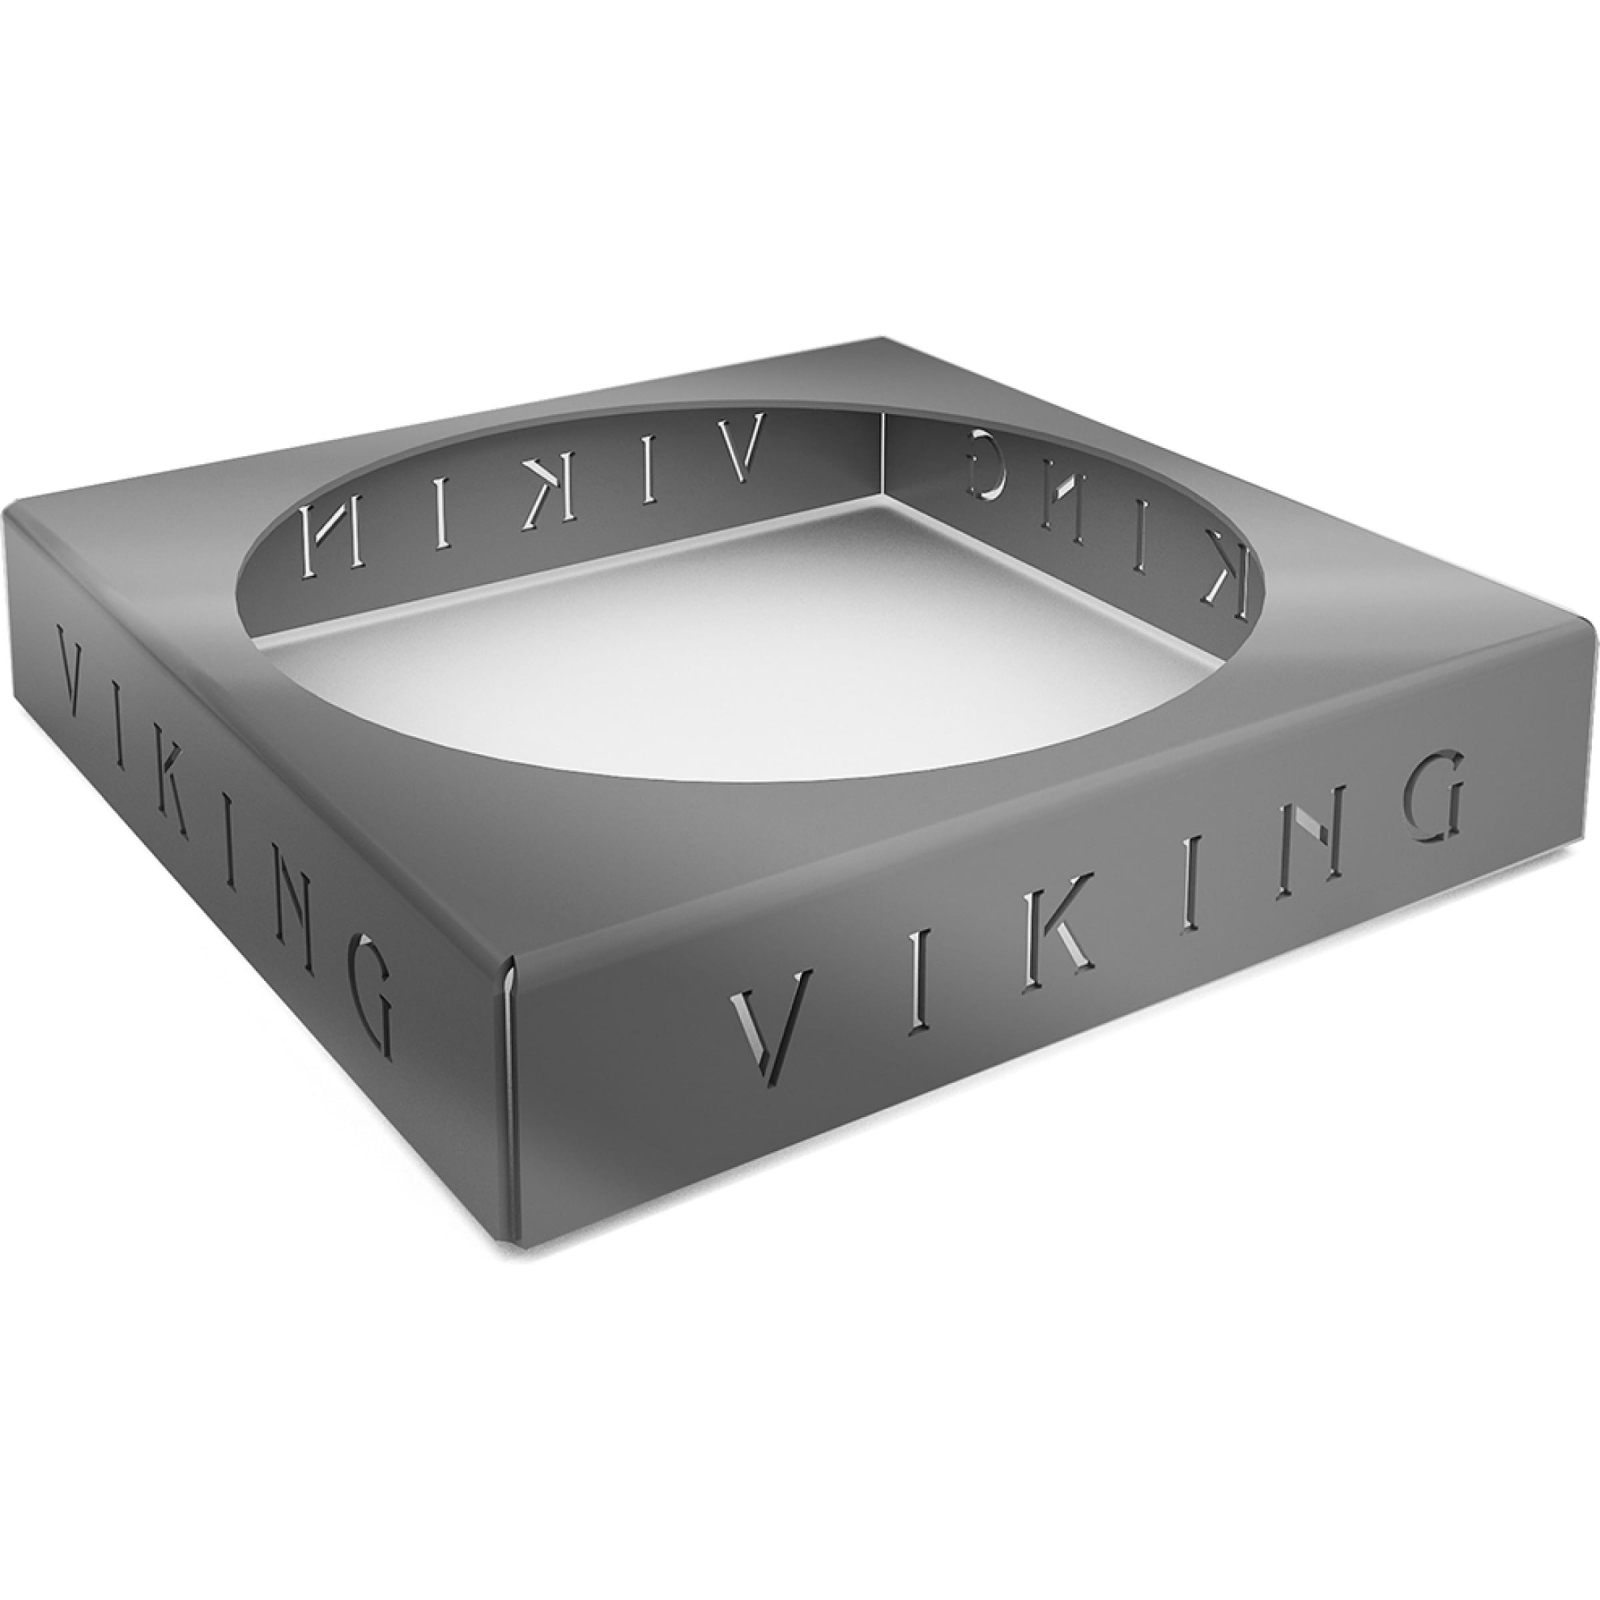 Подставка под казан Grillux для VikinG сцепка viking нв 560 585 new 3 регулировки